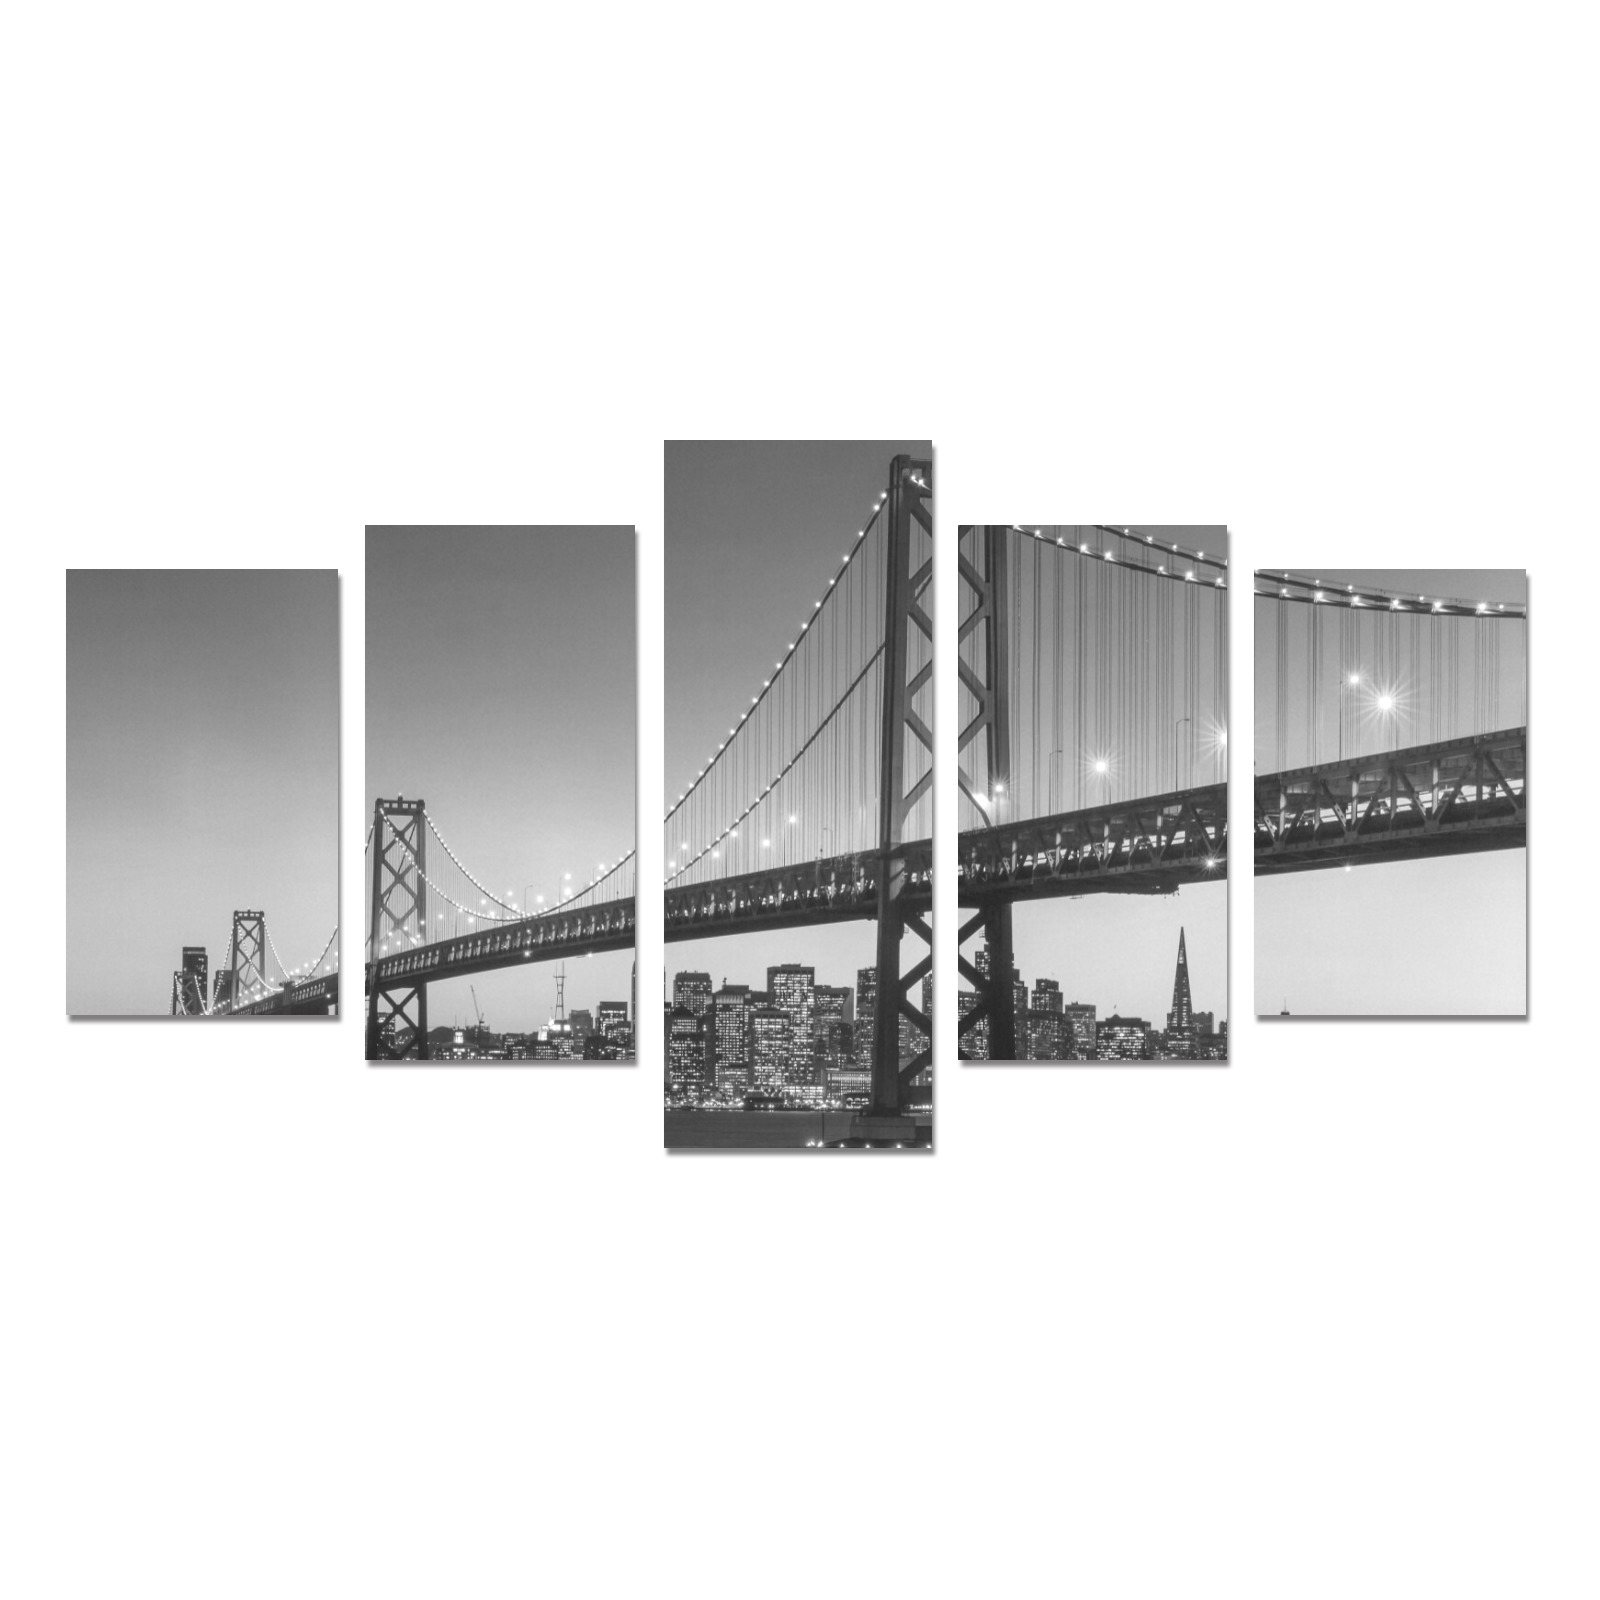 San Francisco skyline and Bay Bridge at sunset, California USA Canvas Print Sets C (No Frame)